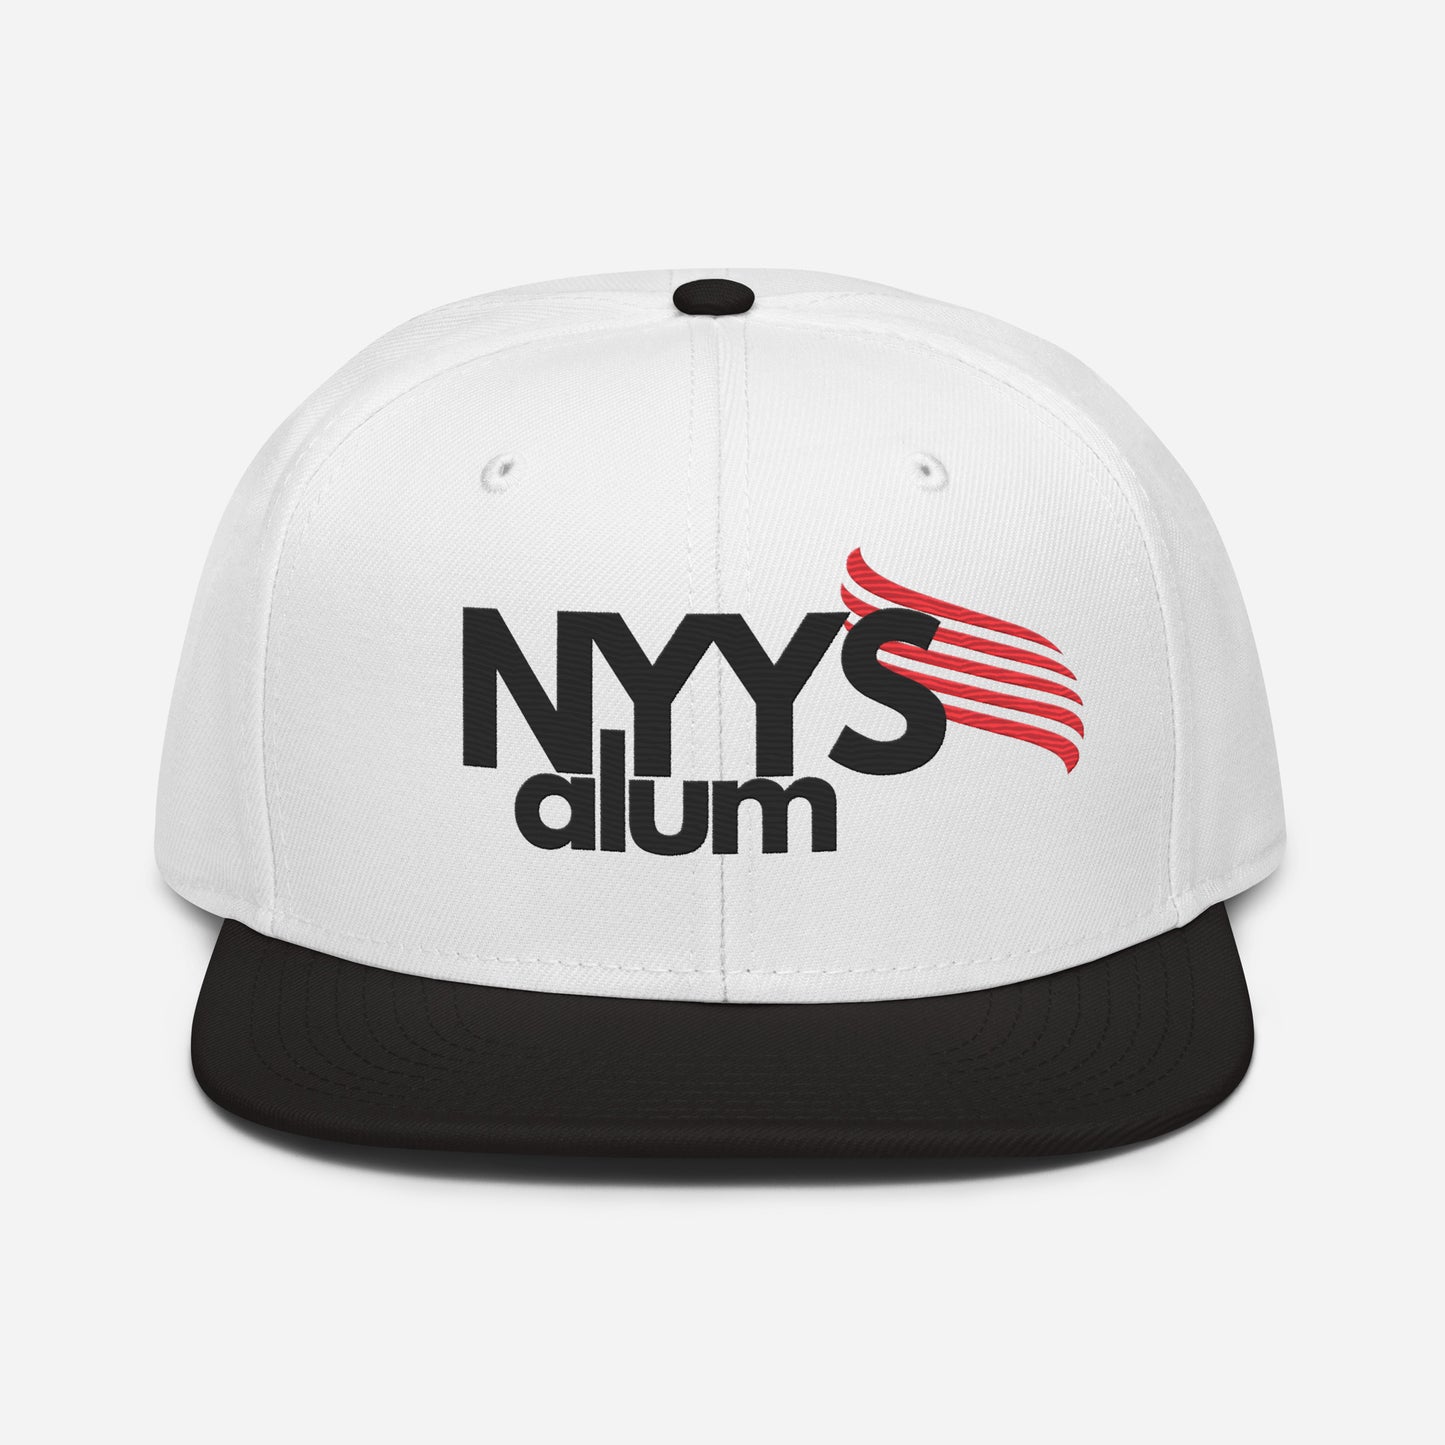 NYYS Alum Snapback Hat